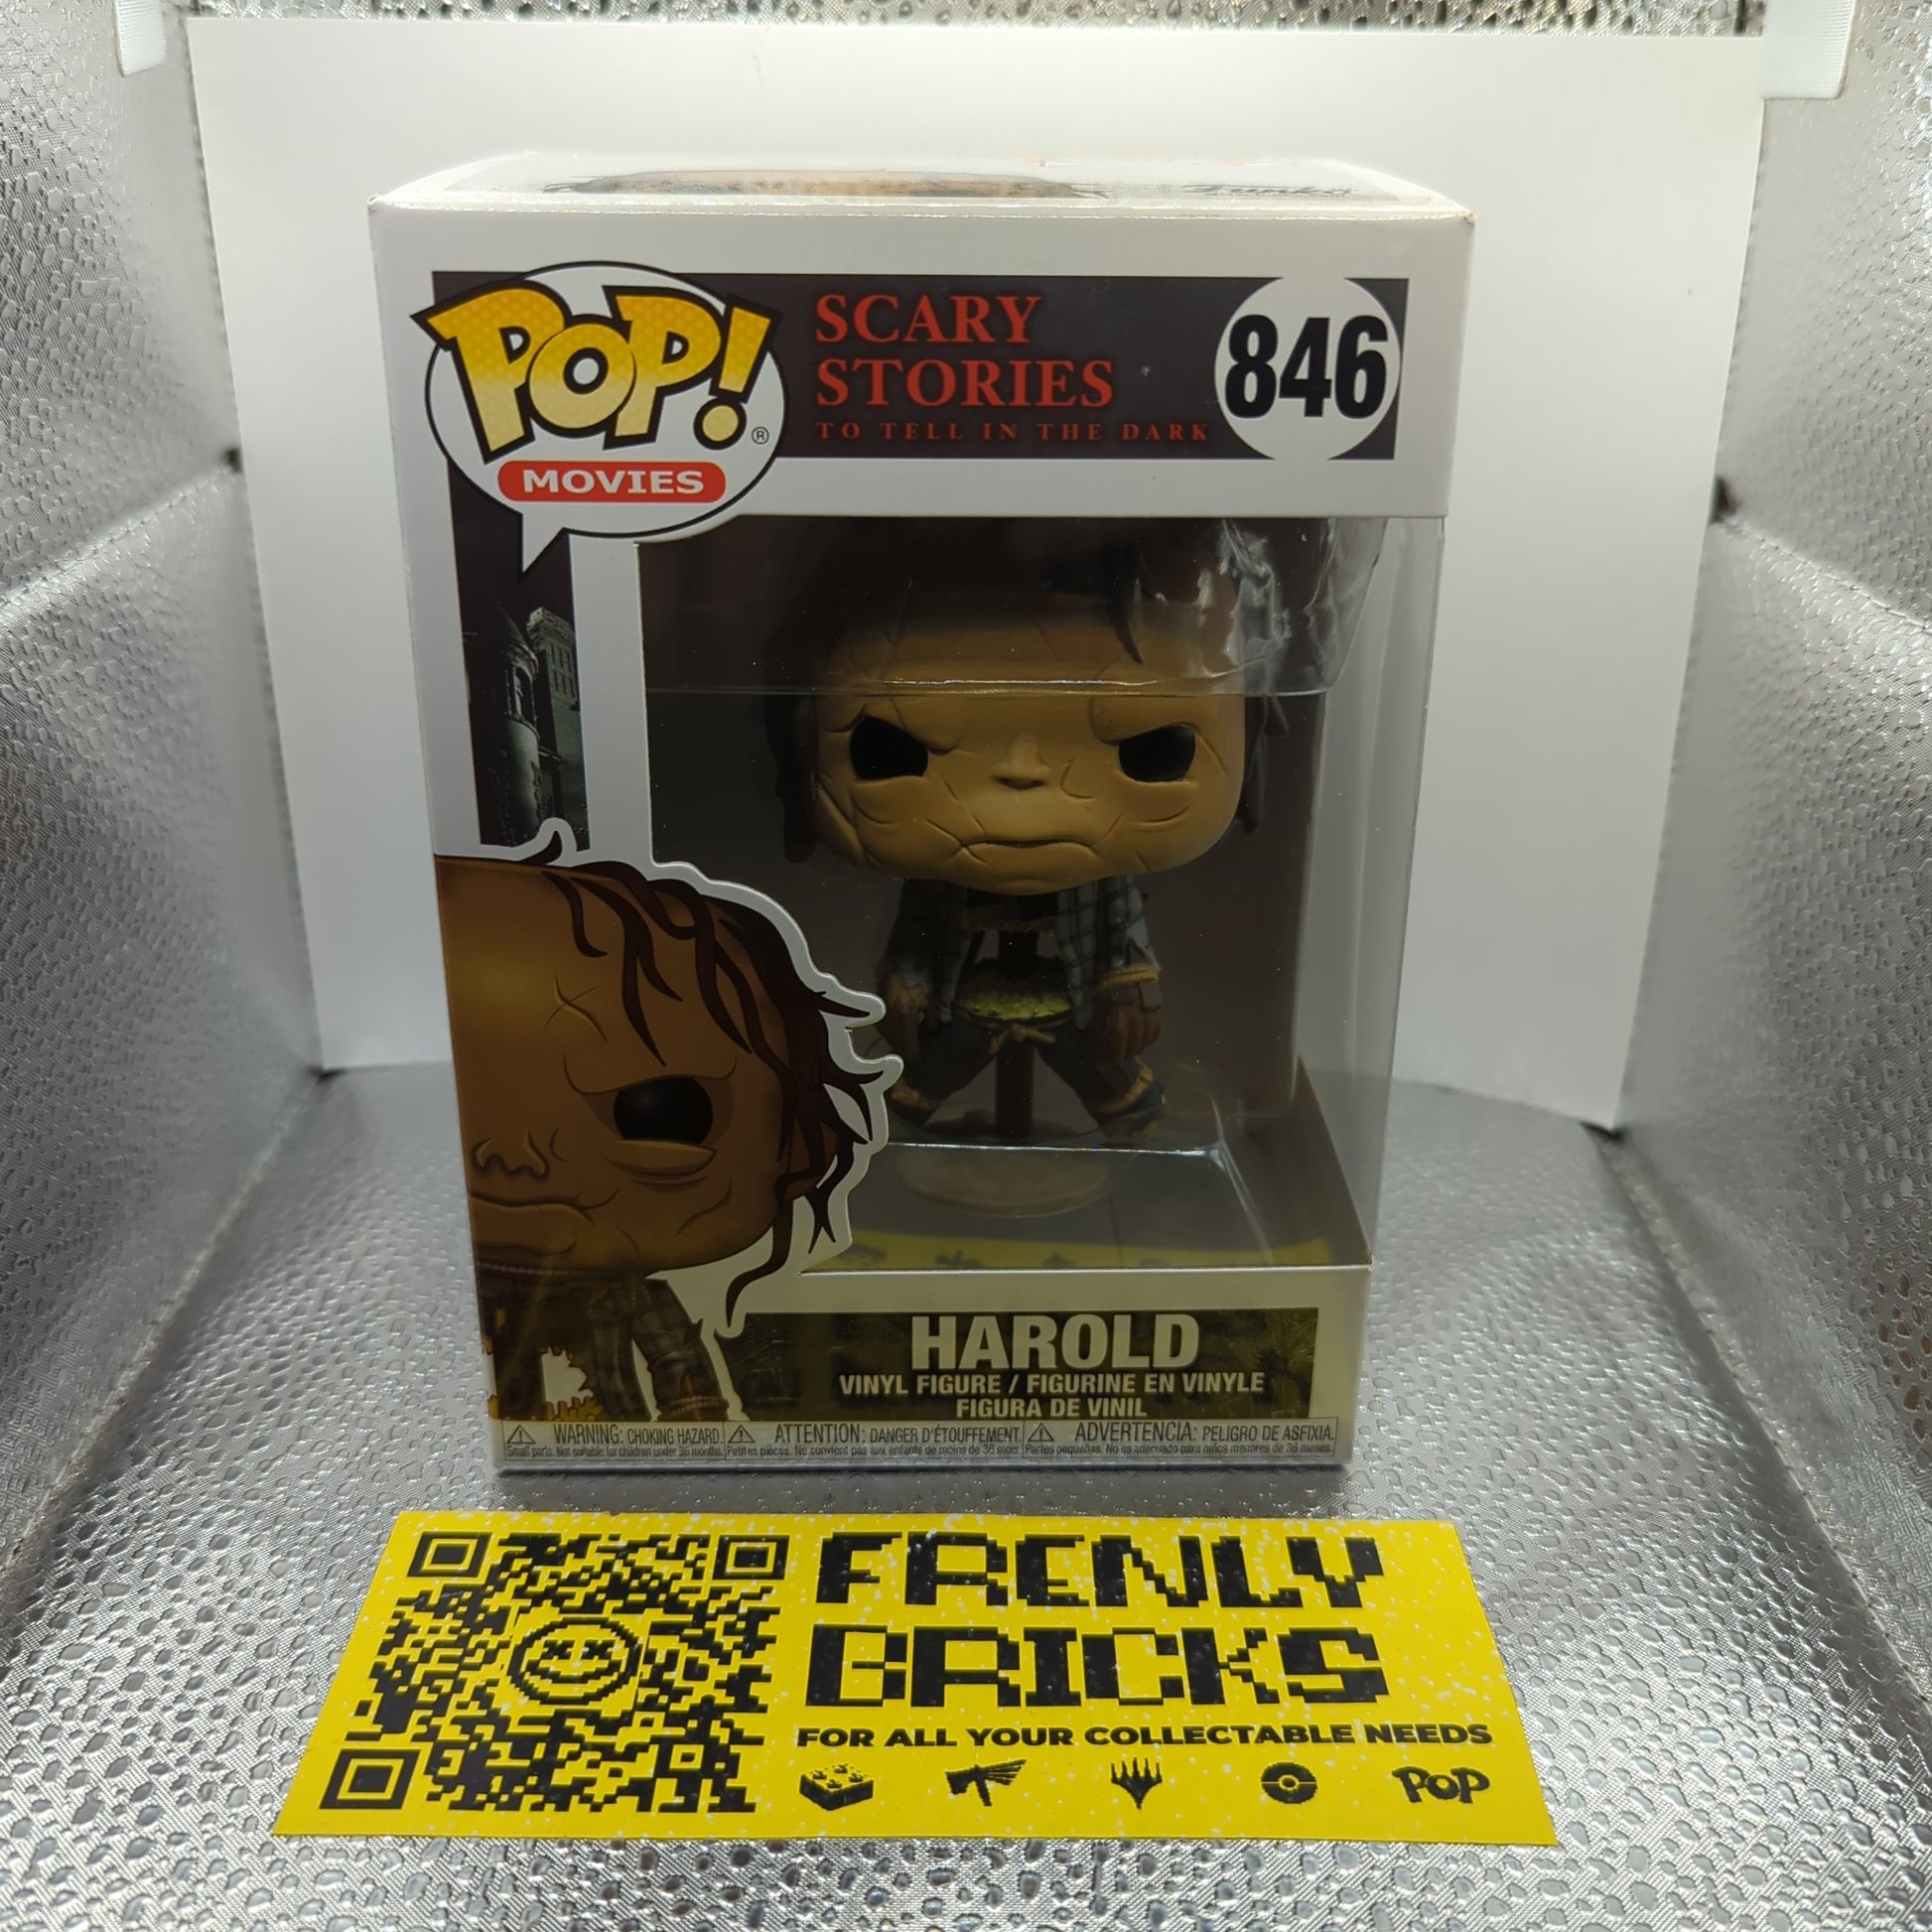 Funko Pop Movies Scary Stories #846 Harold Vinyl Figure FRENLY BRICKS - Open 7 Days